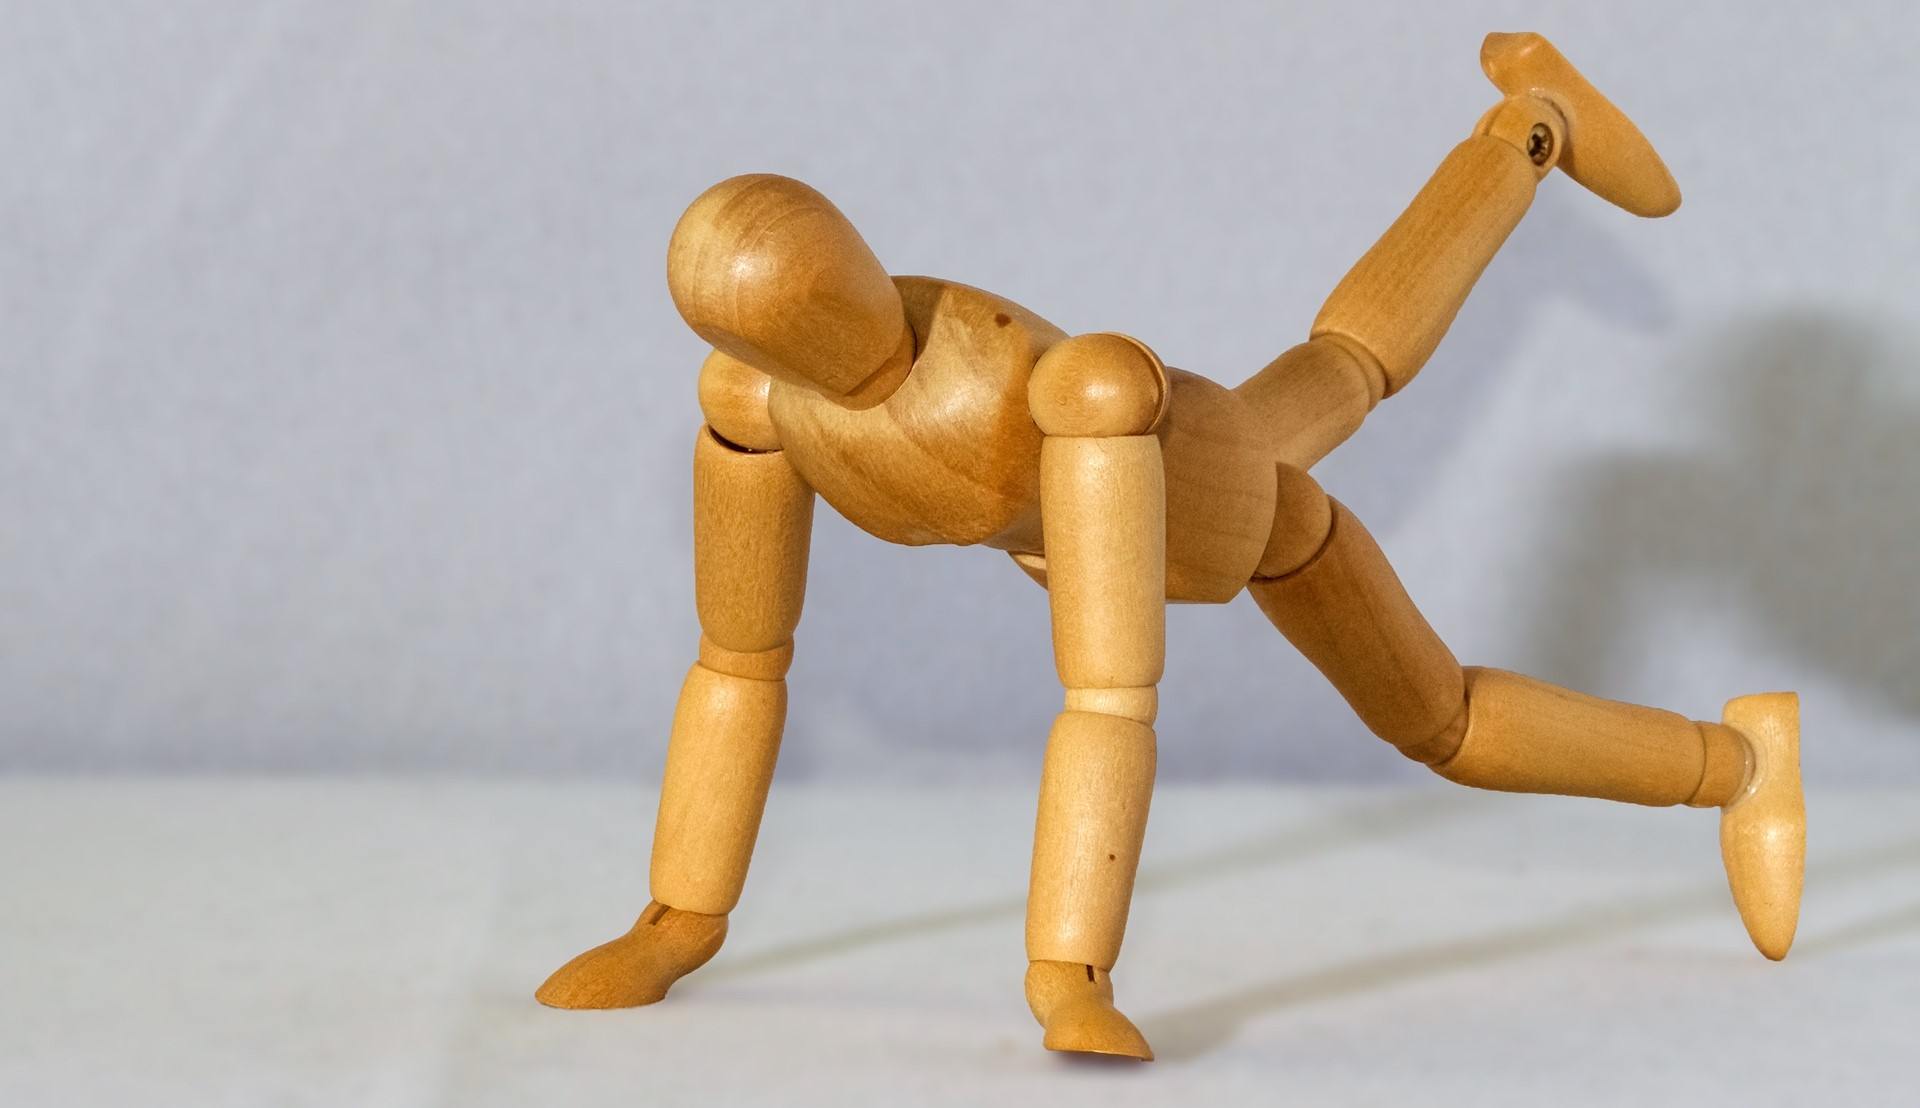 A figure doing a push-up